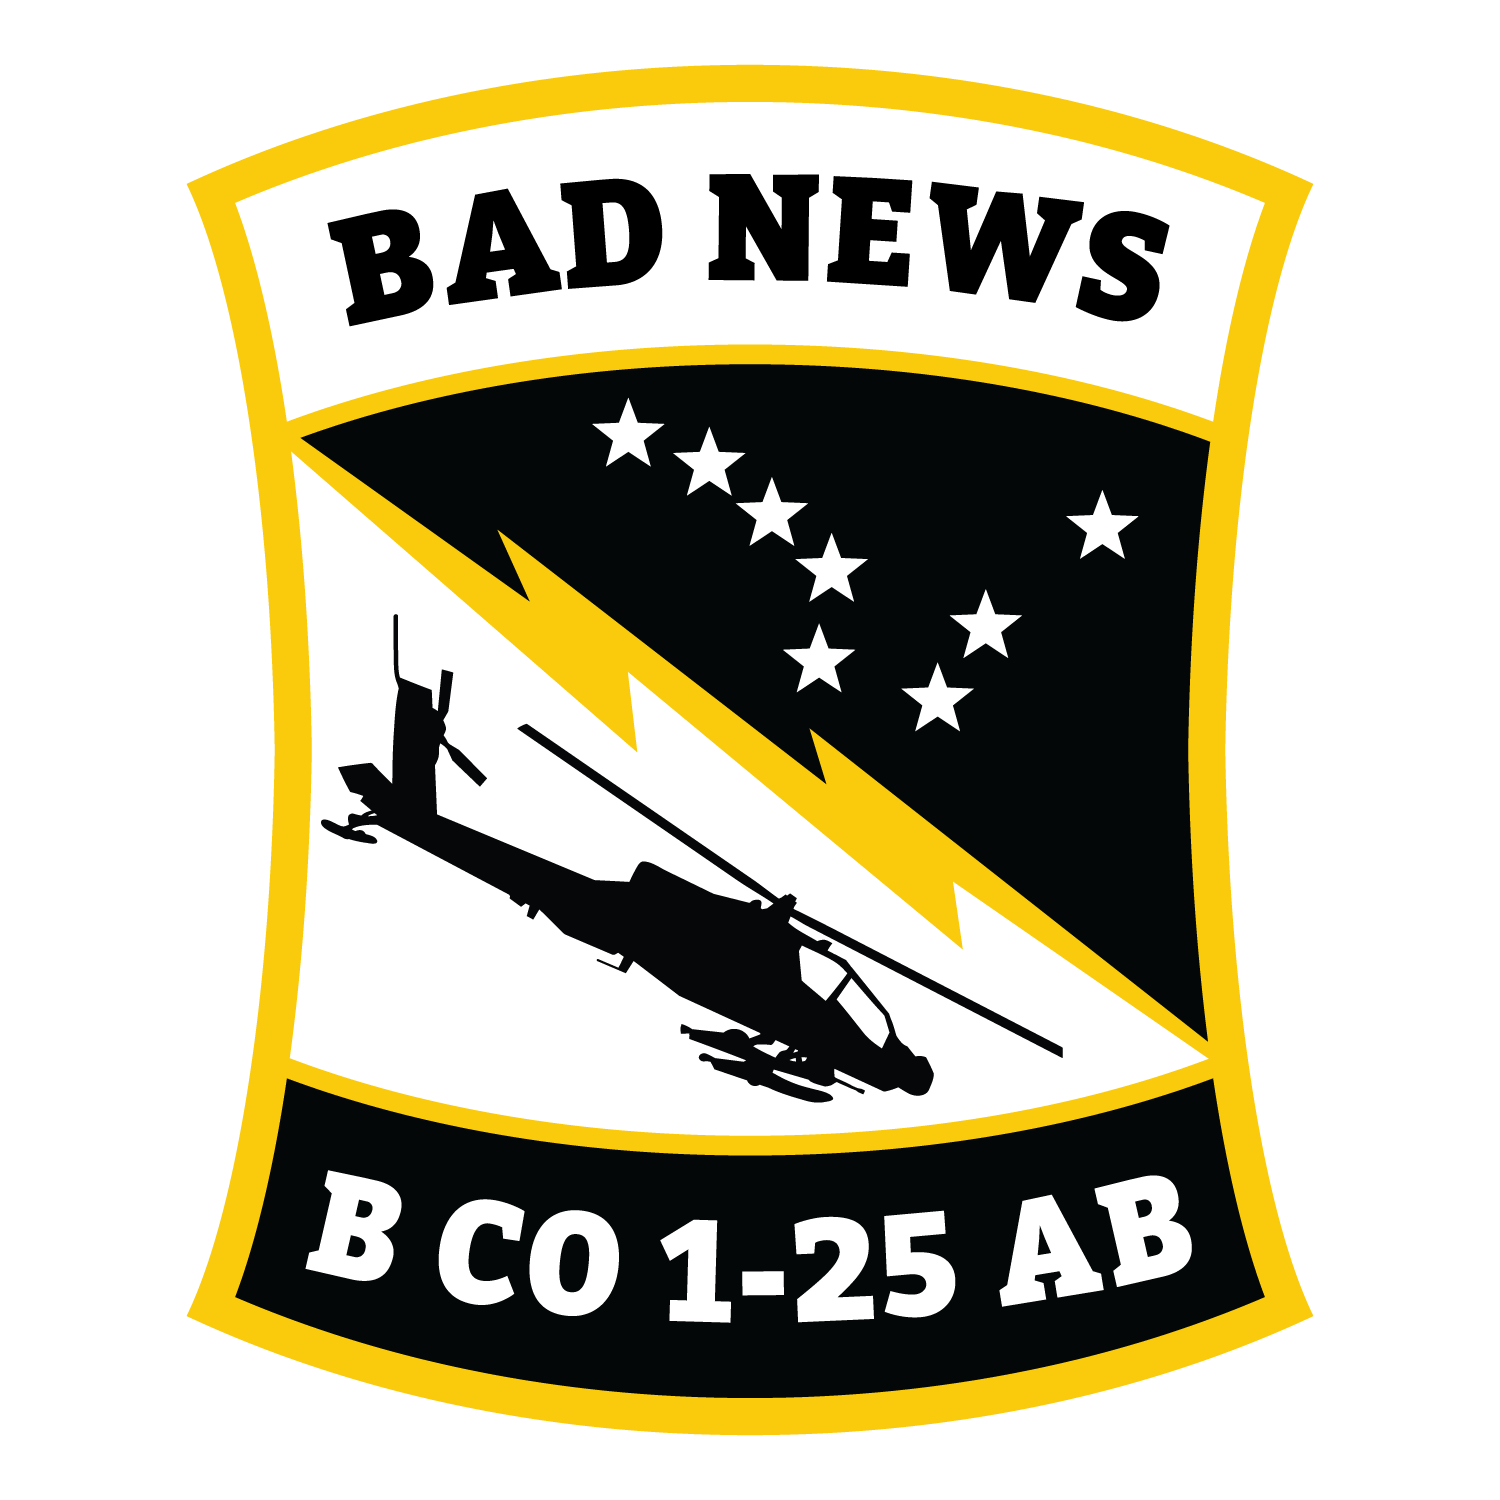 B Co, 1-25 AB “Bad News”